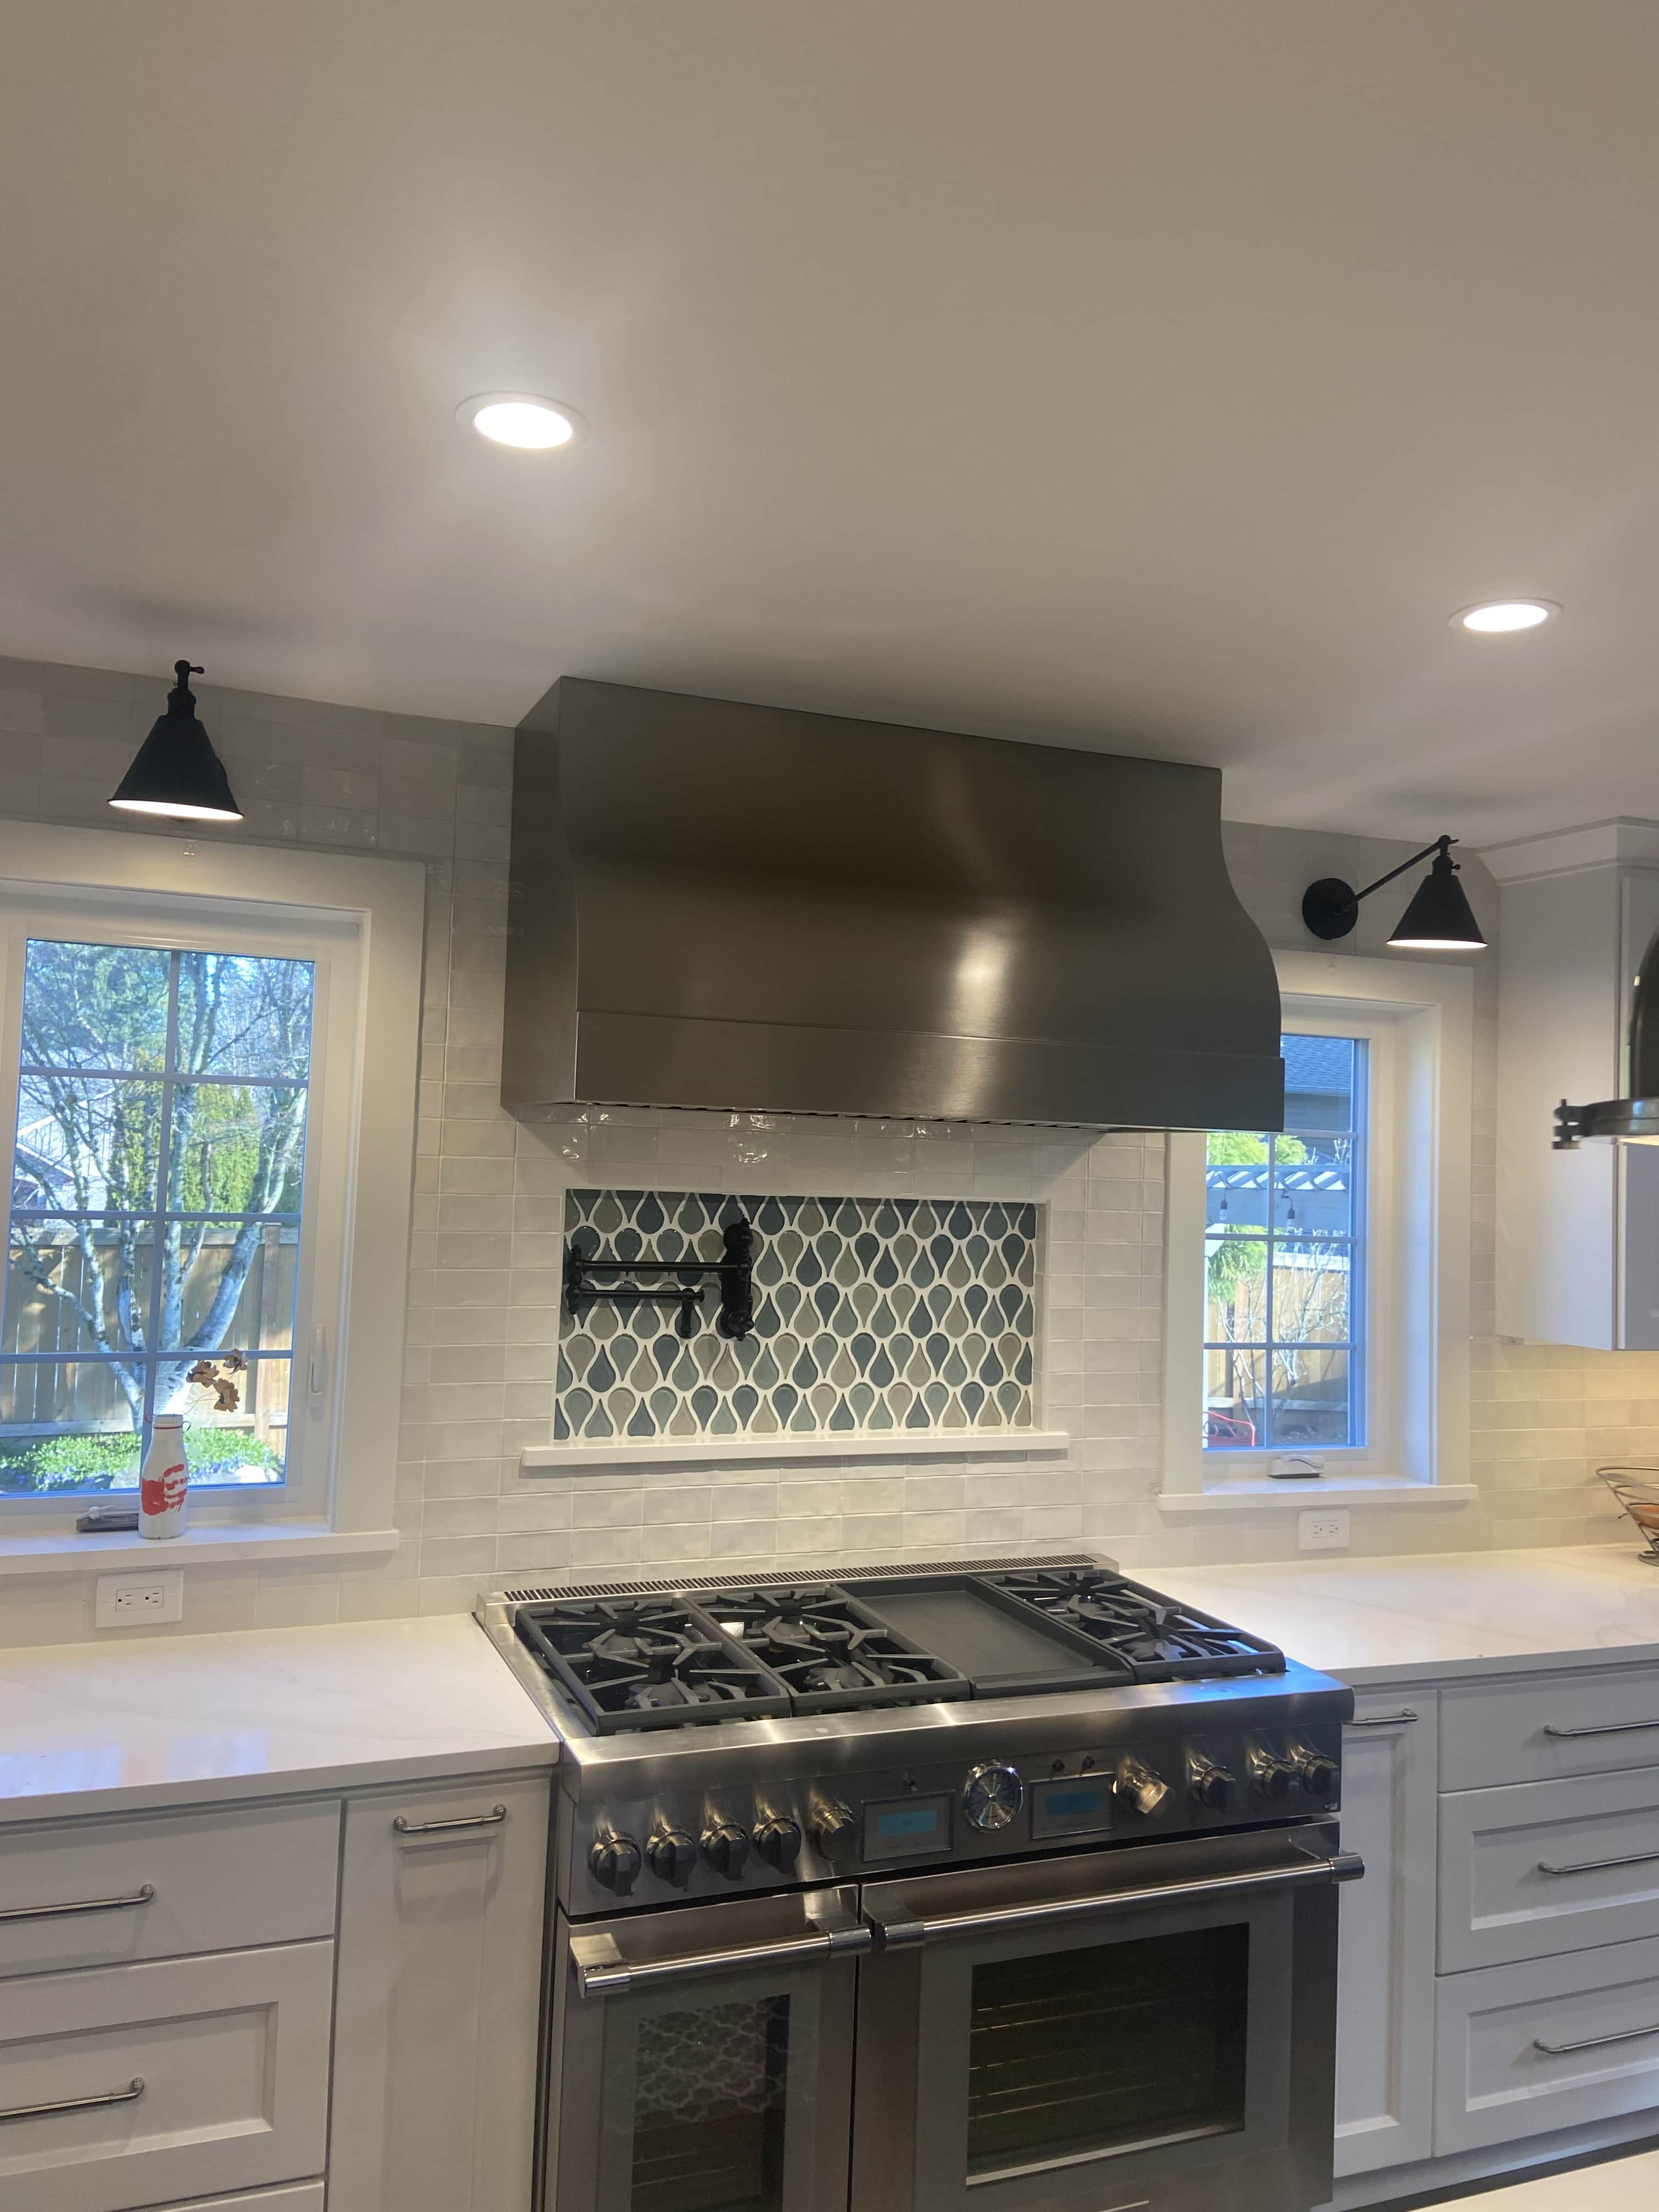 Contemporary kitchen remodeling project, sleek white kitchen cabinets and white kitchen countertops, accentuated by a stylish brick backsplash